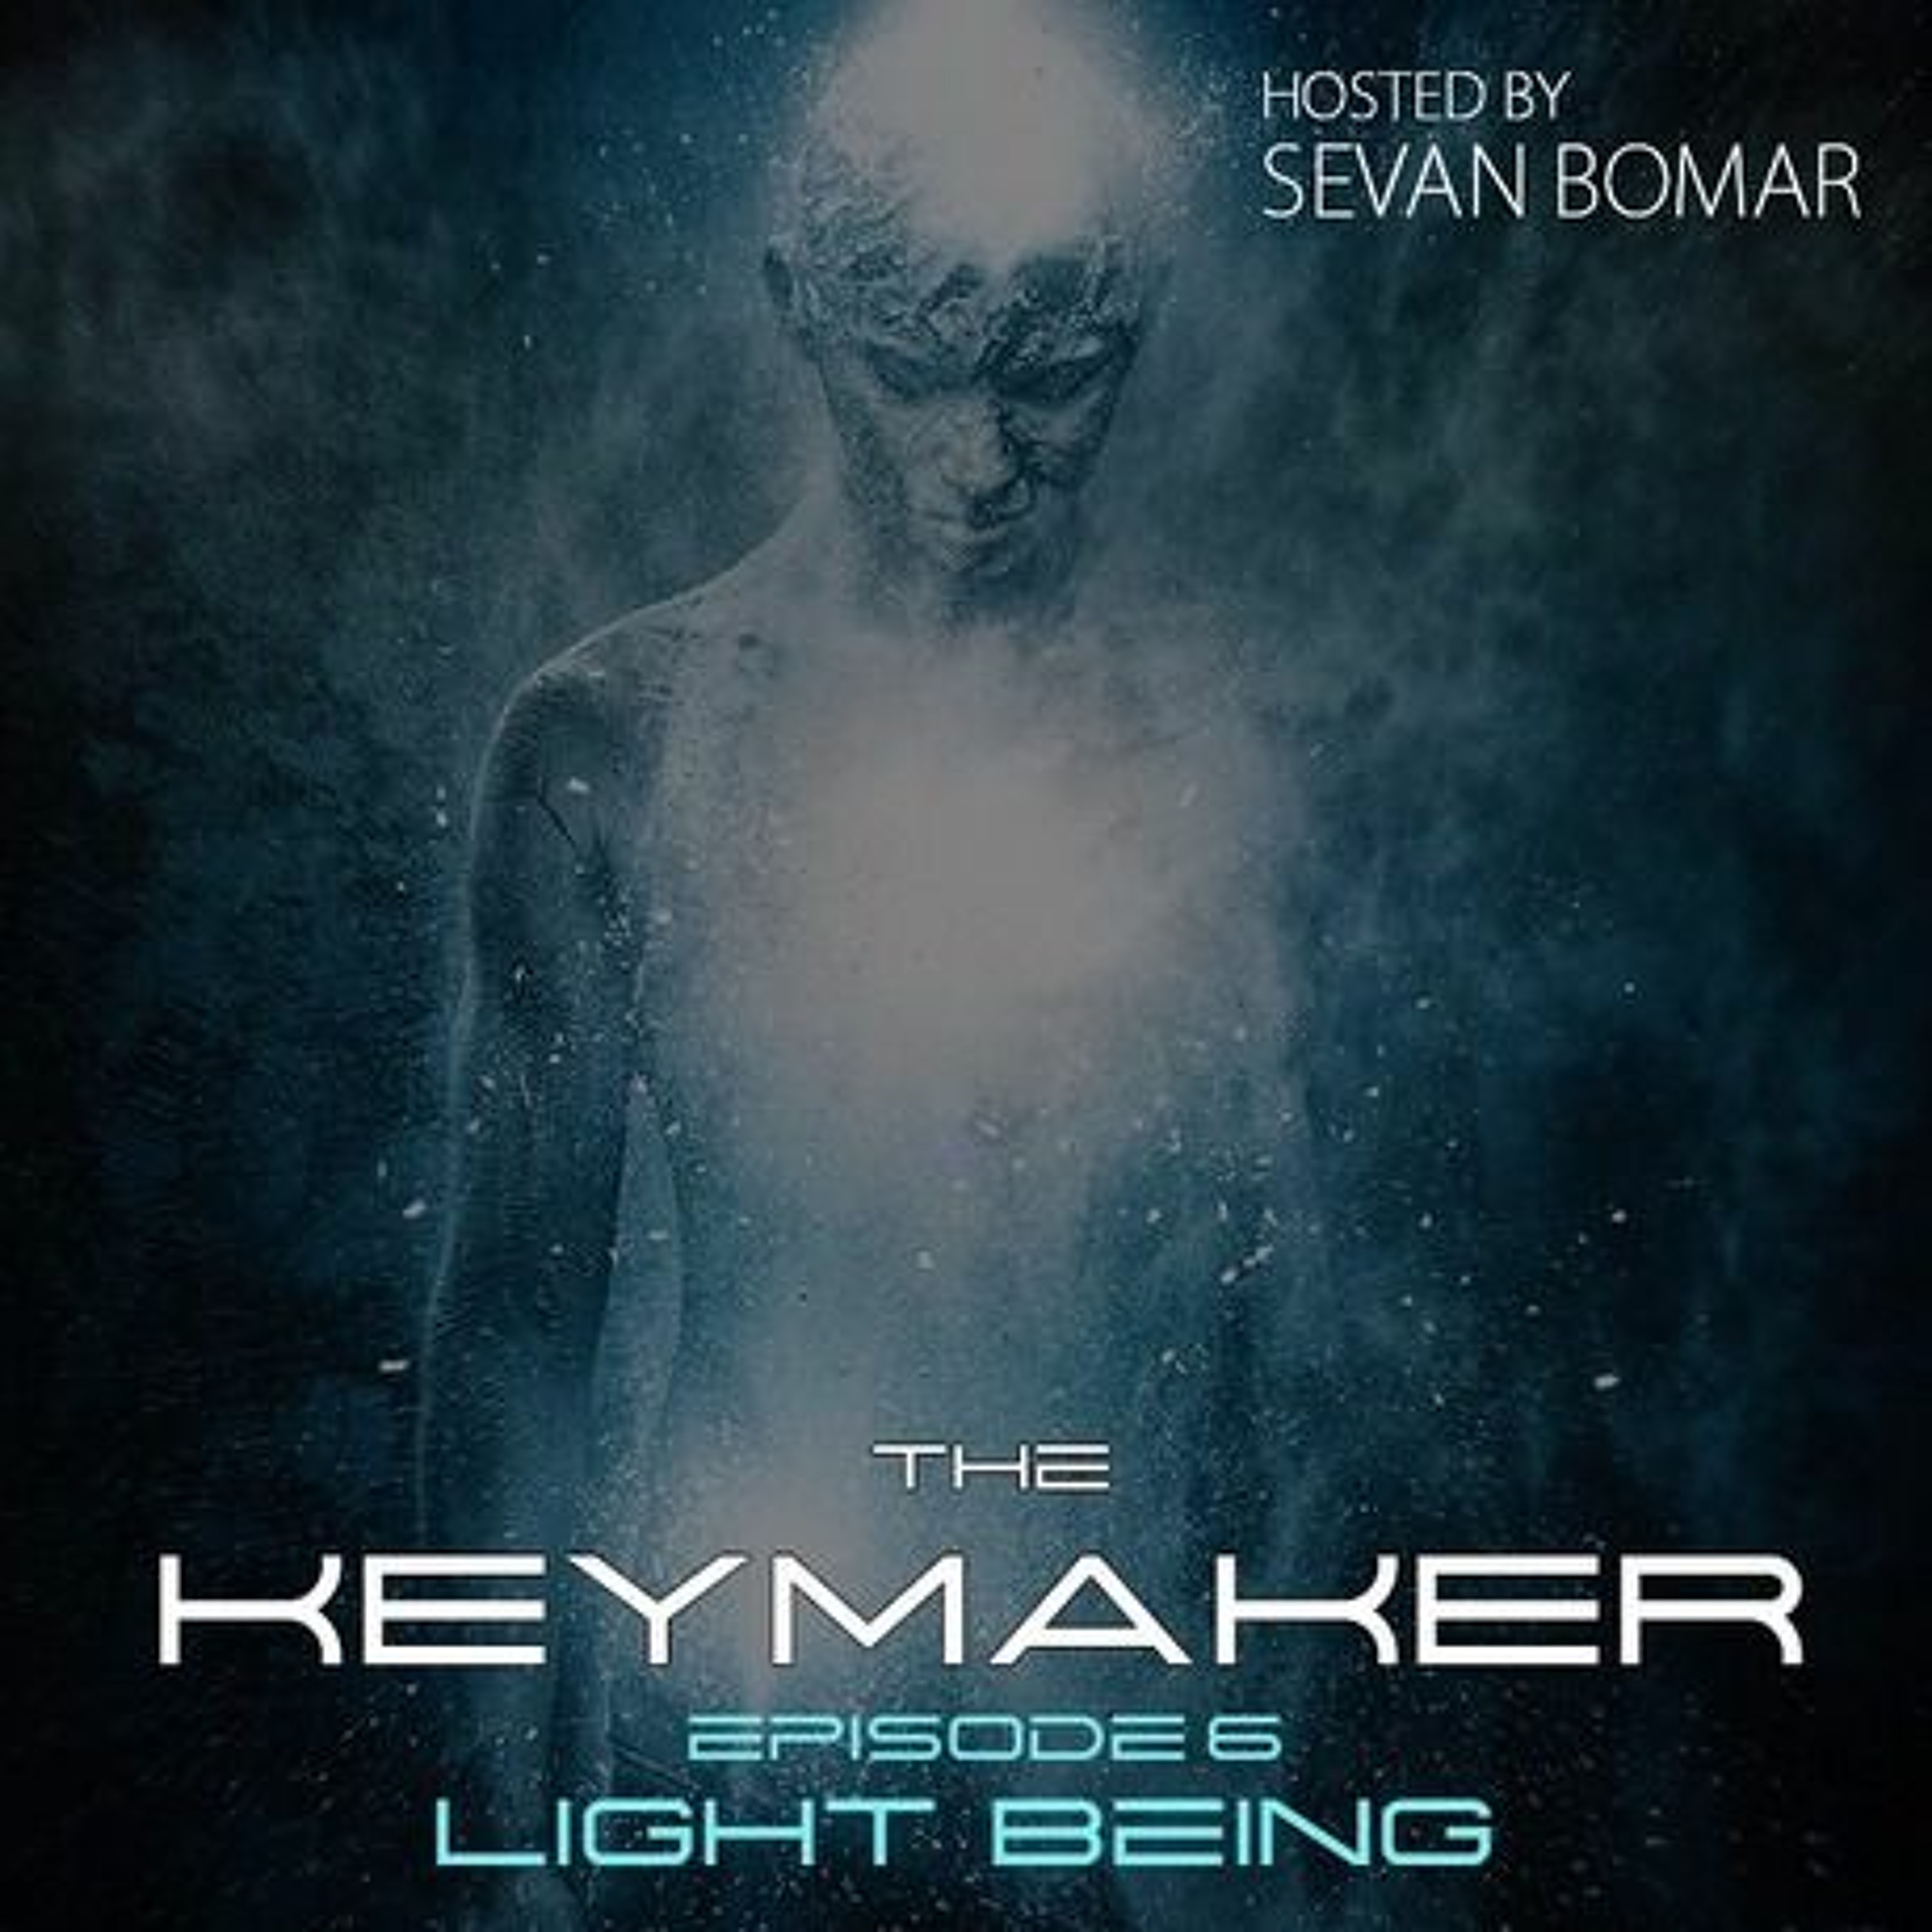 SEVAN BOMAR - THE KEYMAKER, EPISODE 6 - LIGHT BEING - DEC 12 2015